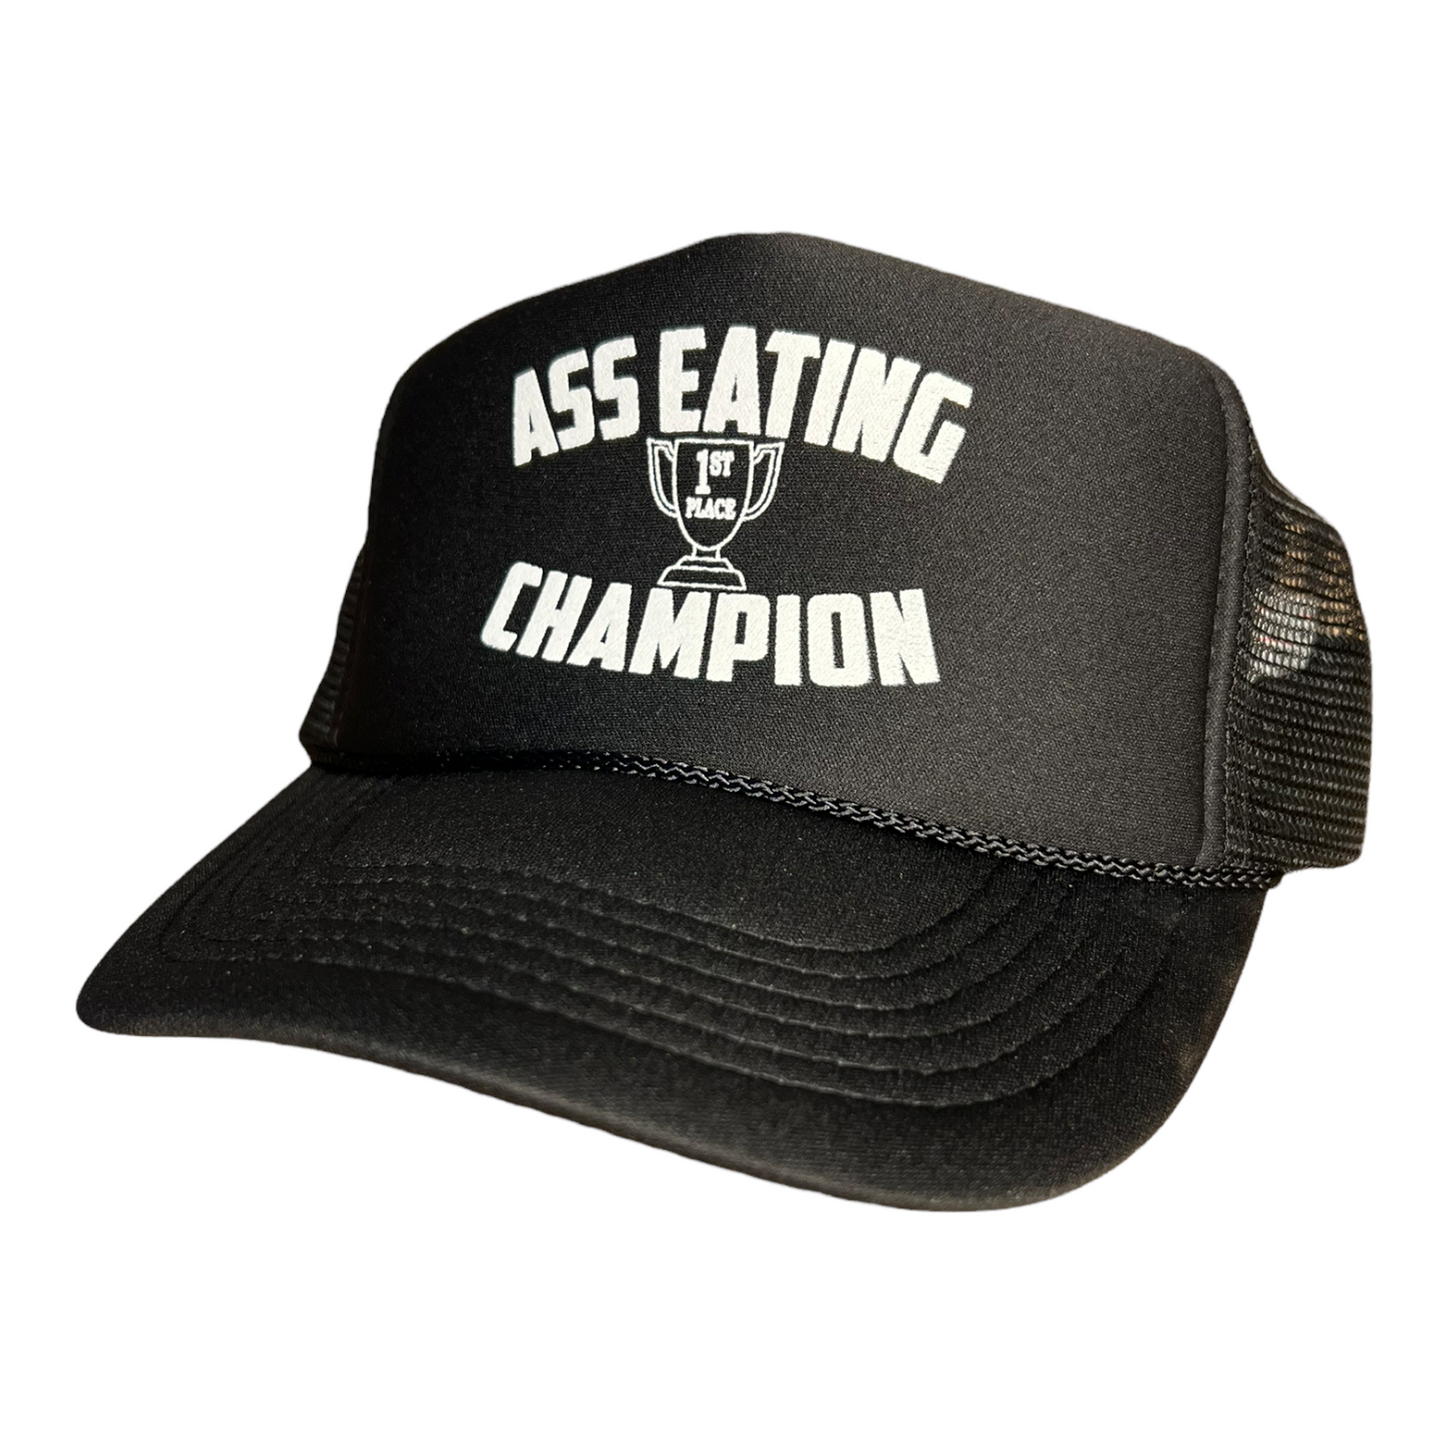 Ass Eating Champion Trucker Hat Funny Trucker Hat Black